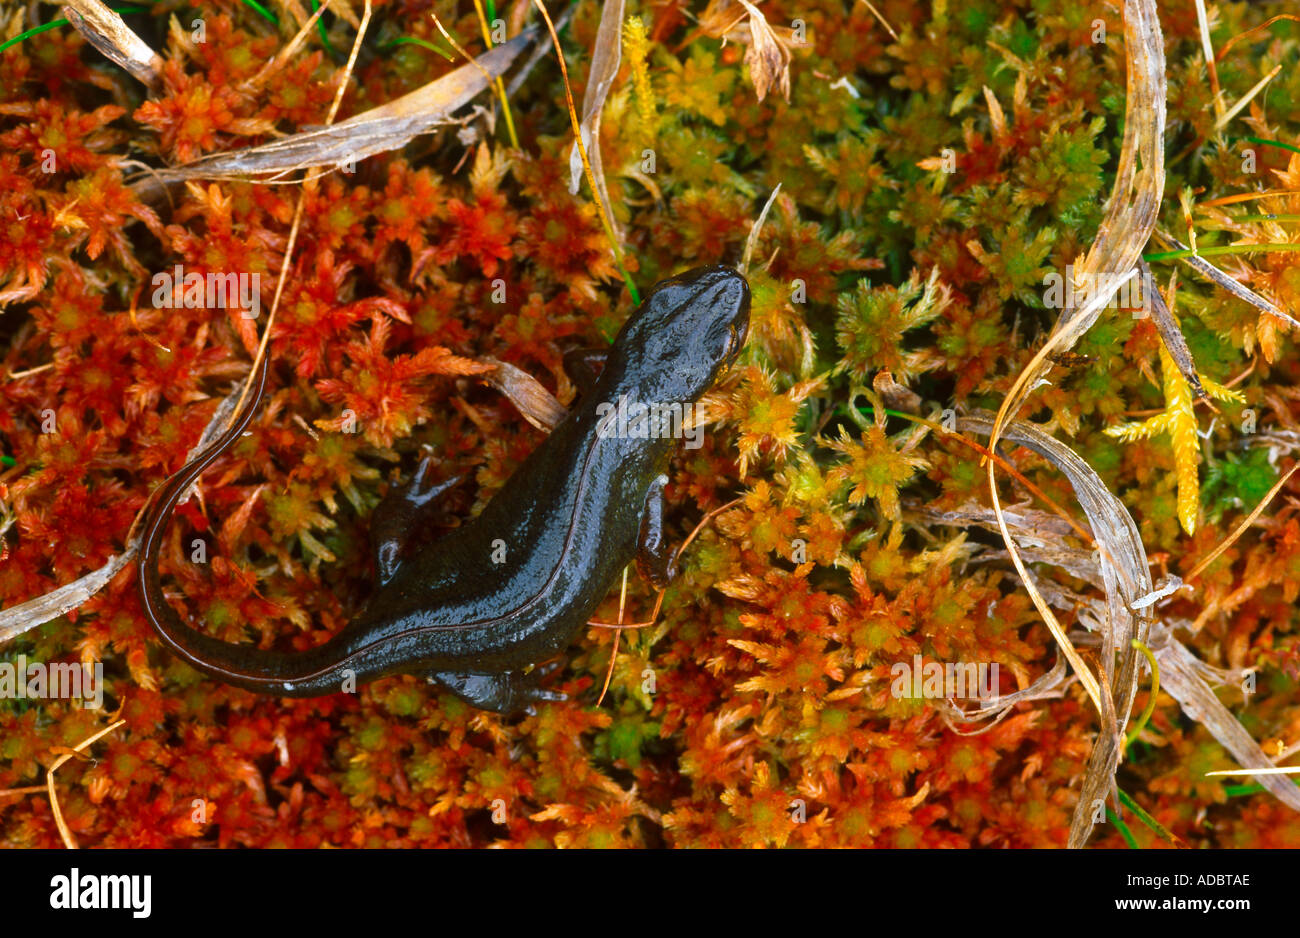 Growing sphagnum moss  : Newts and Salamanders Portal